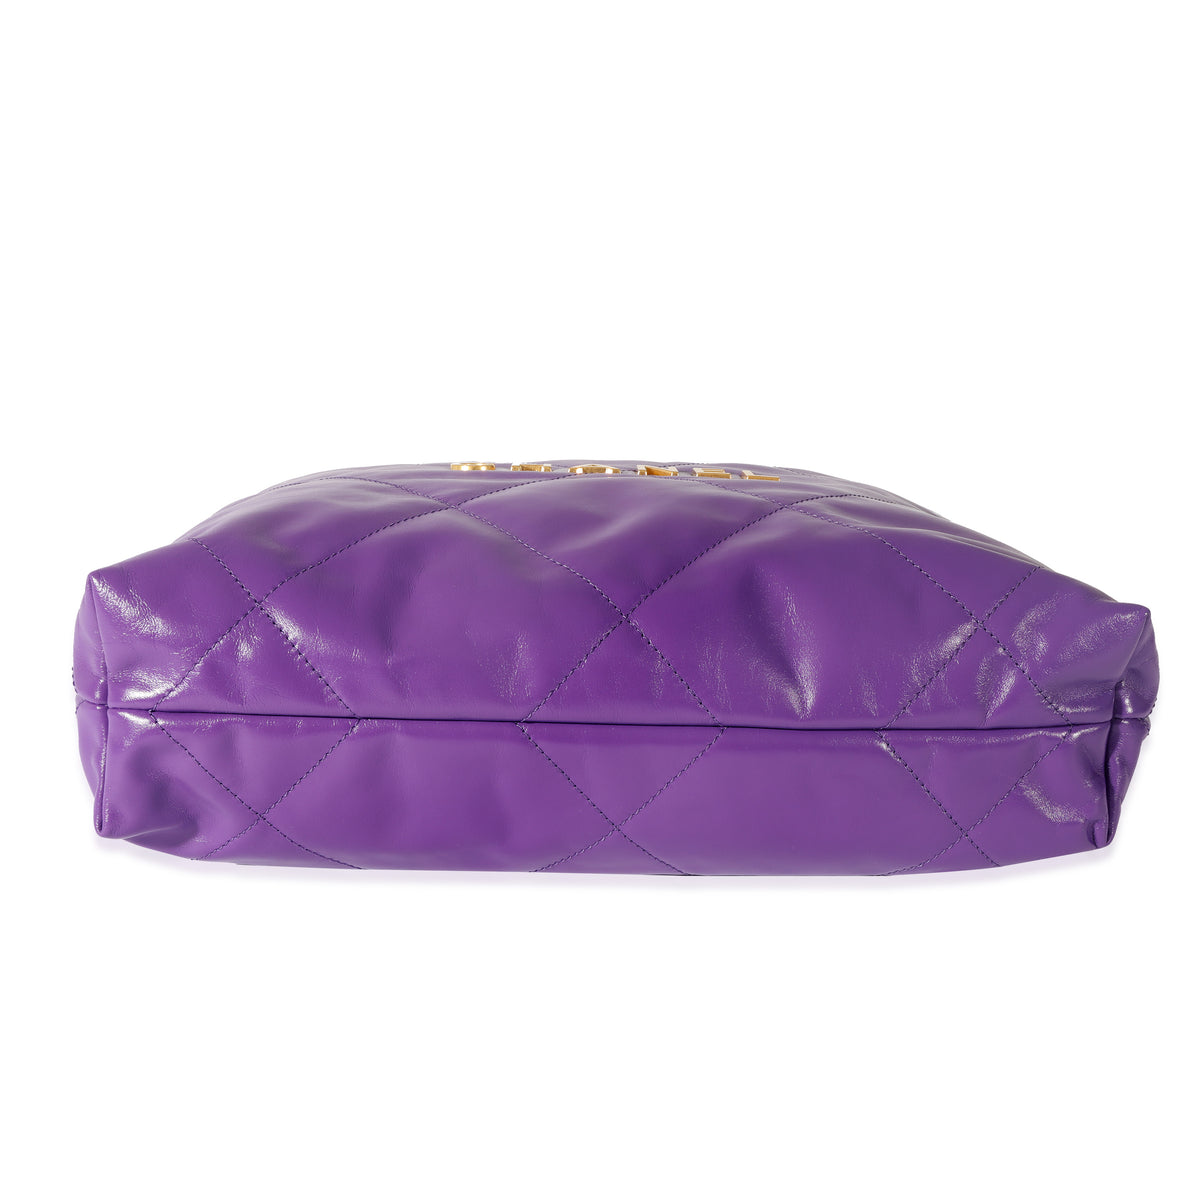 Chanel 22 Purple Medium - Designer WishBags